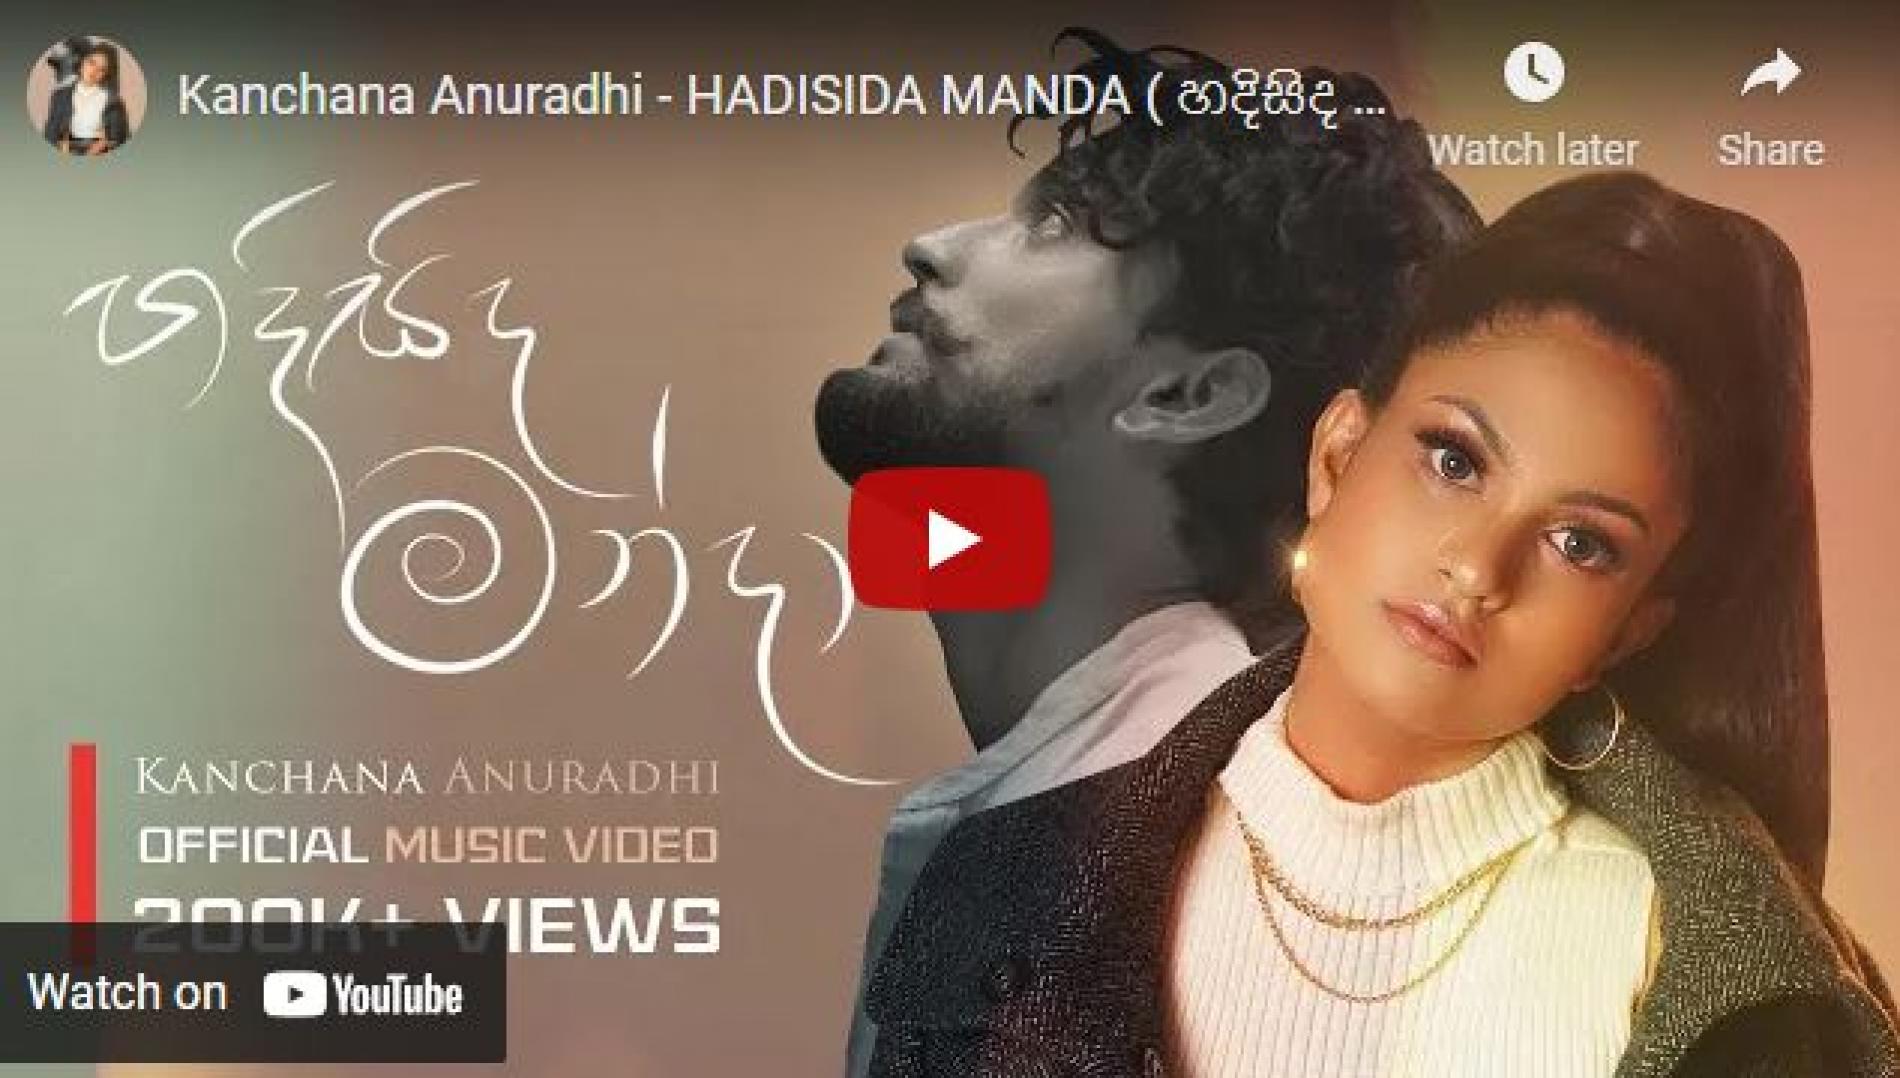 New Music : Kanchana Anuradhi – Hadisida Manda (හදිසිද මන්දා ) Official Music Video